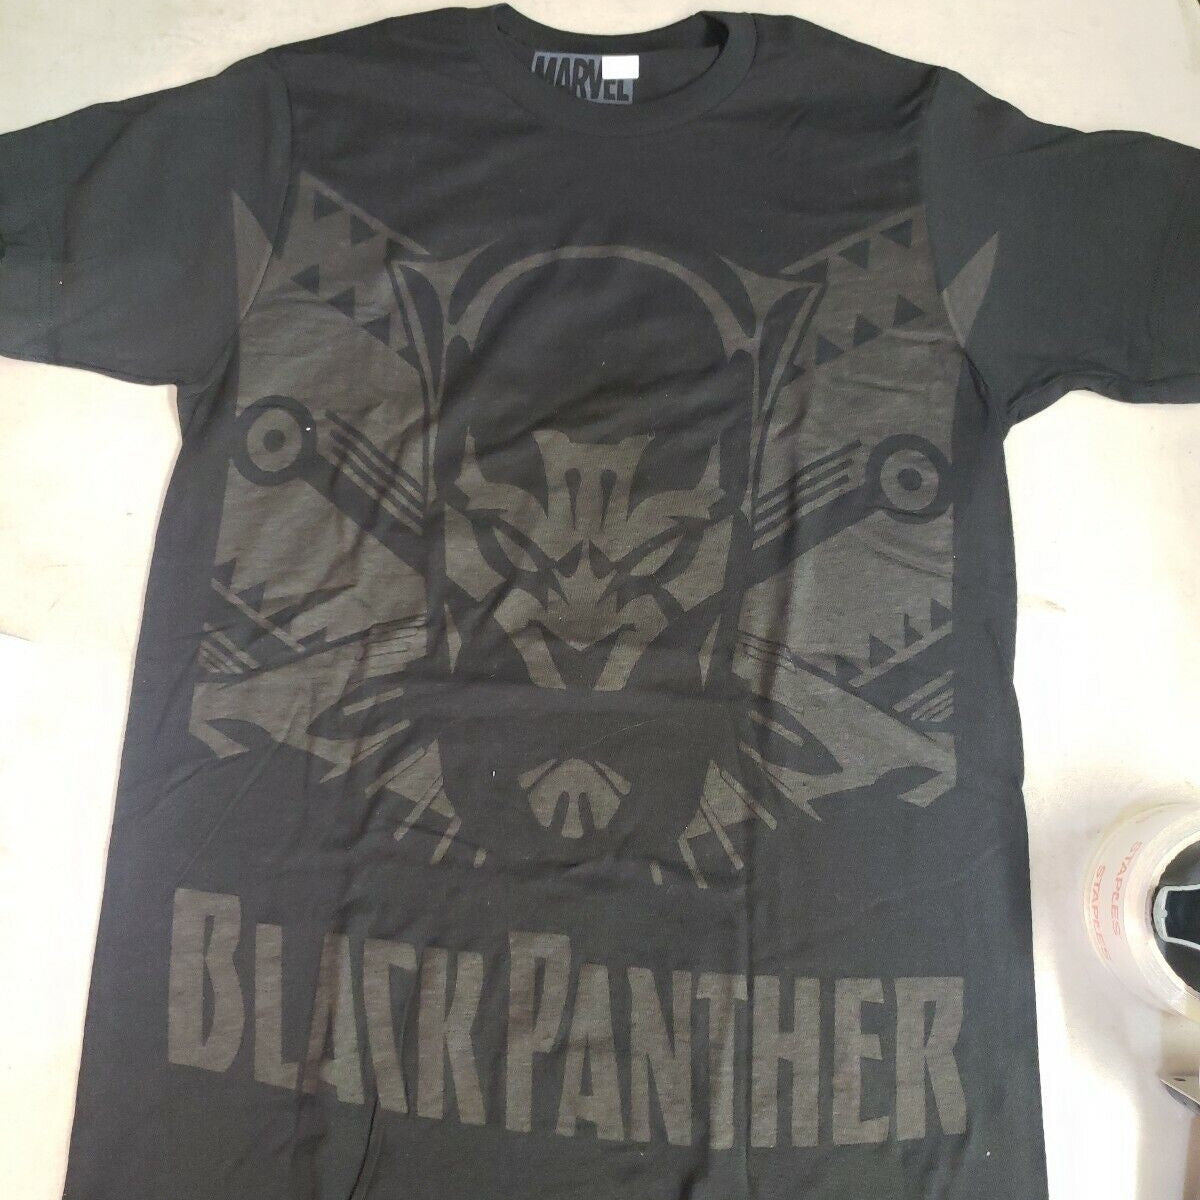 Black Panther - Outline T-shirt